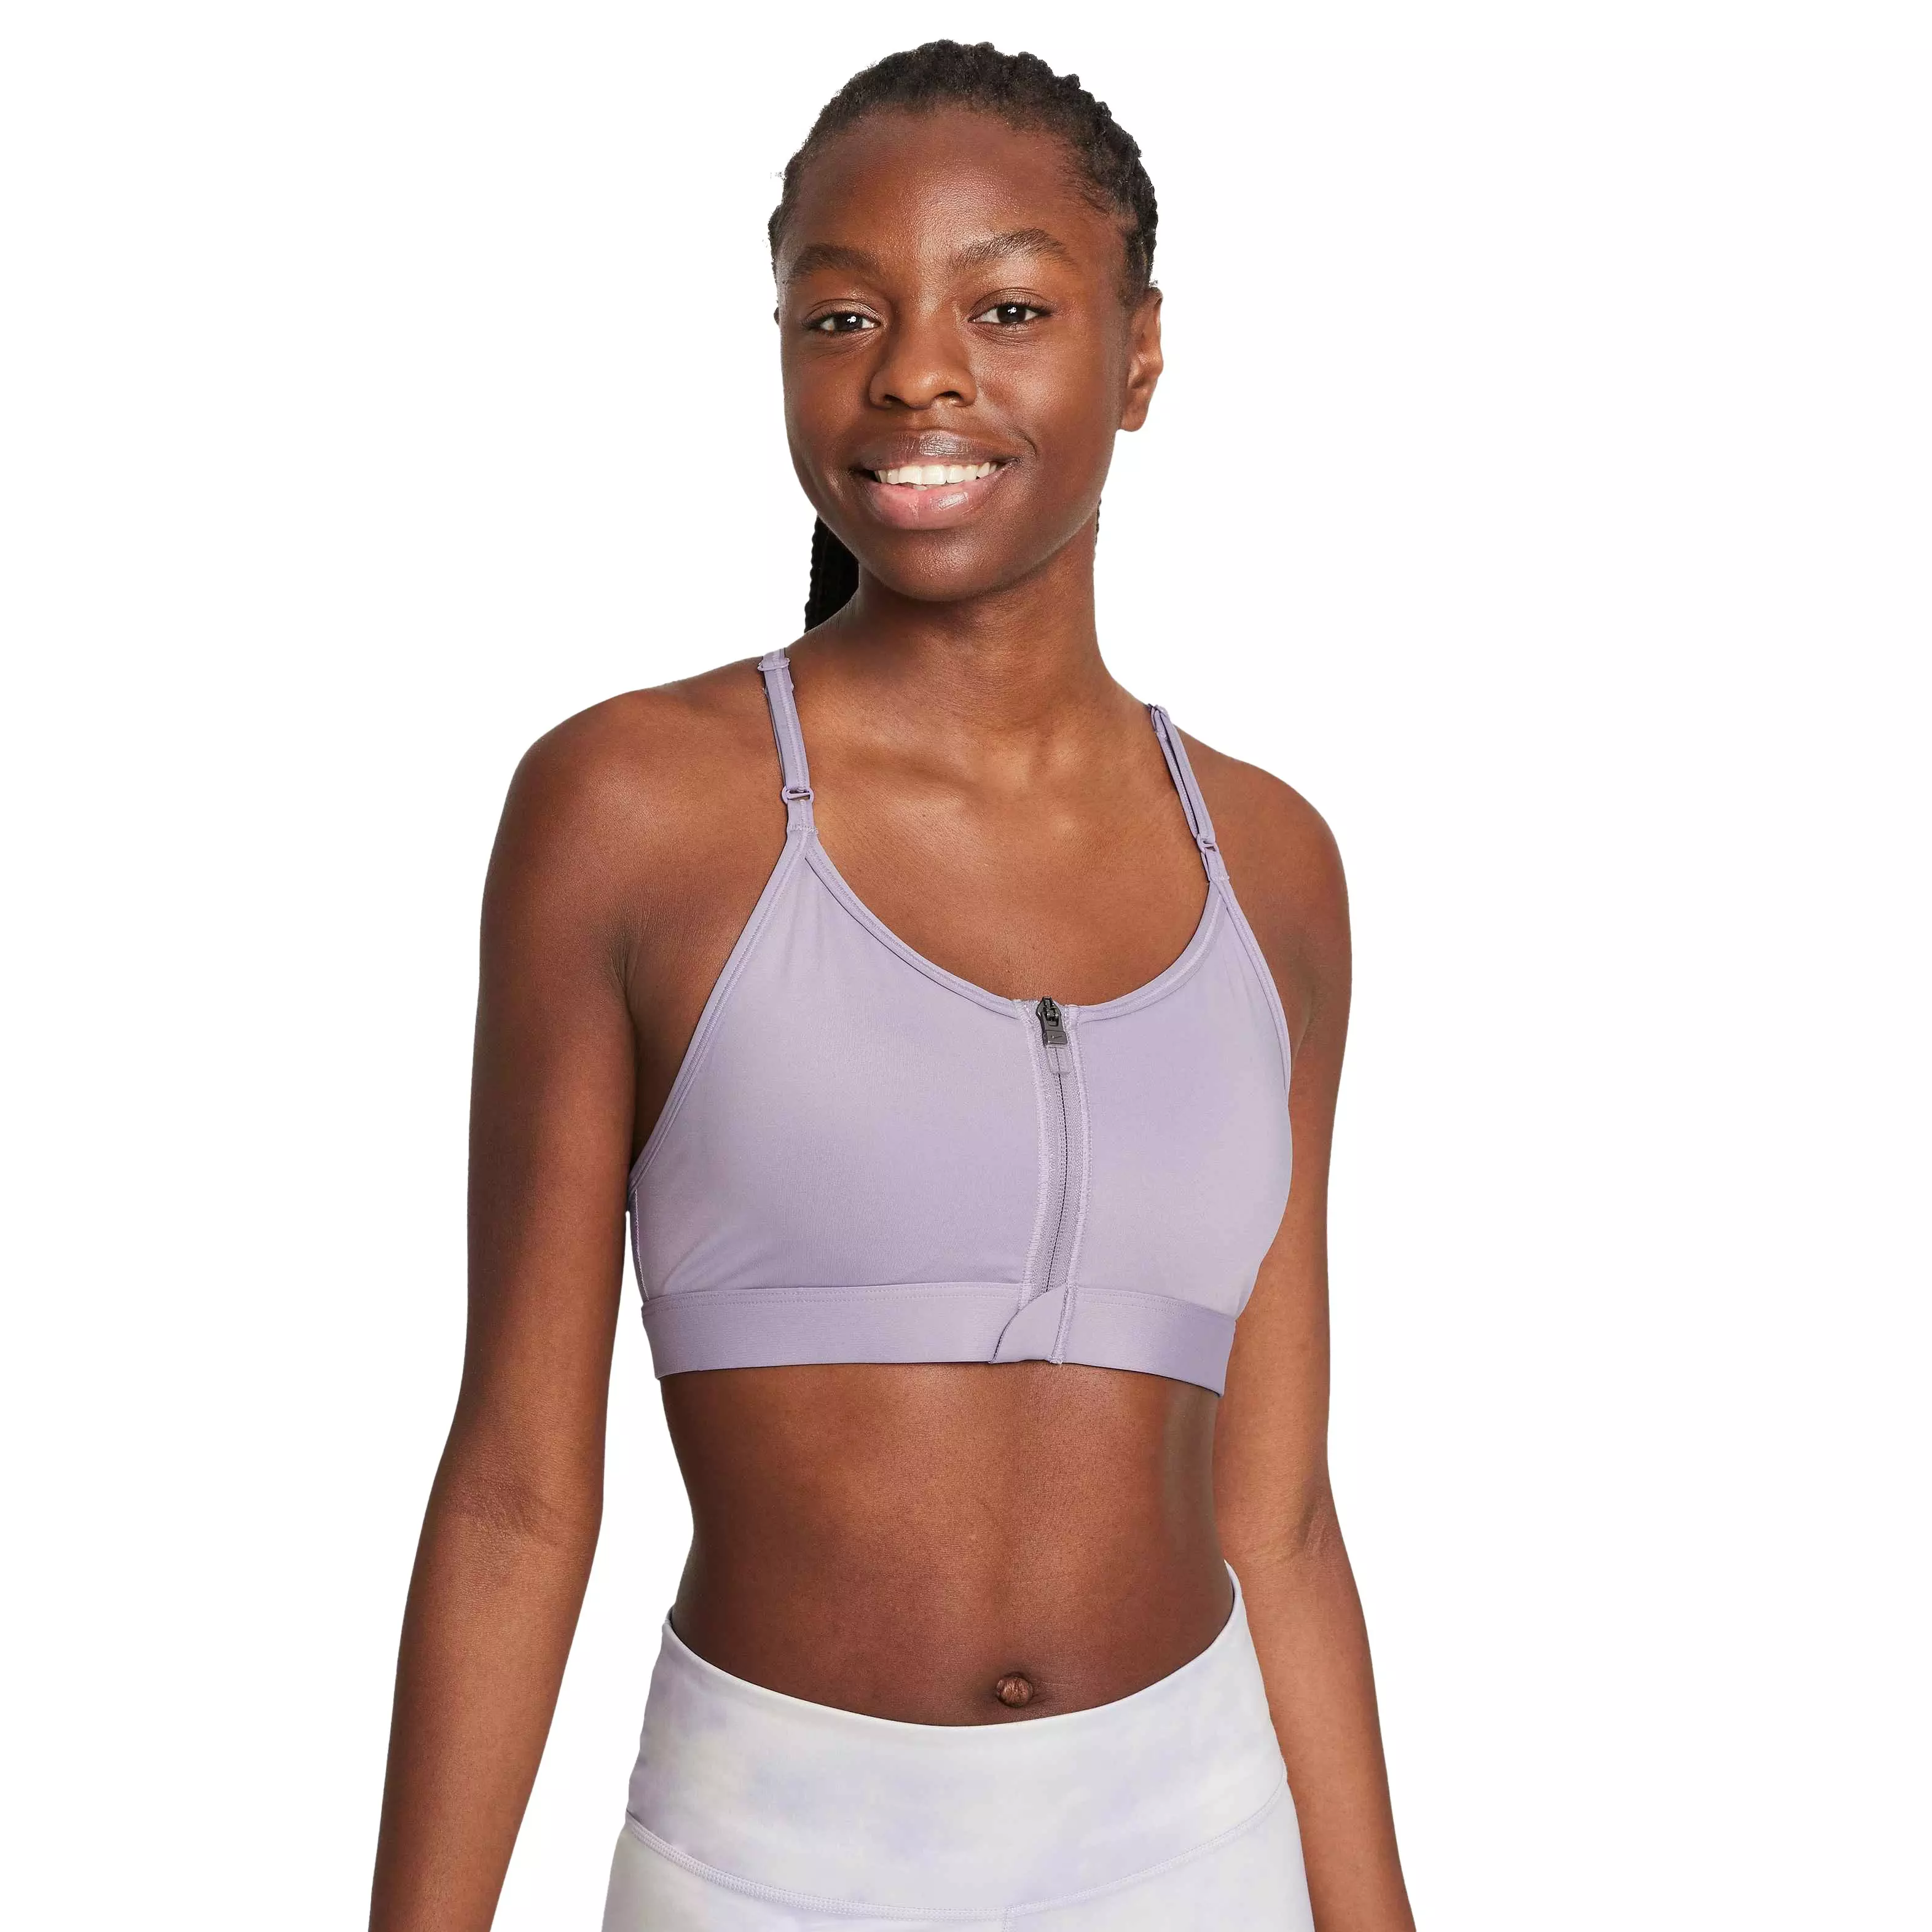 Nike Dri-Fit Indy Women's Light Support Padded Sports Bra Purple